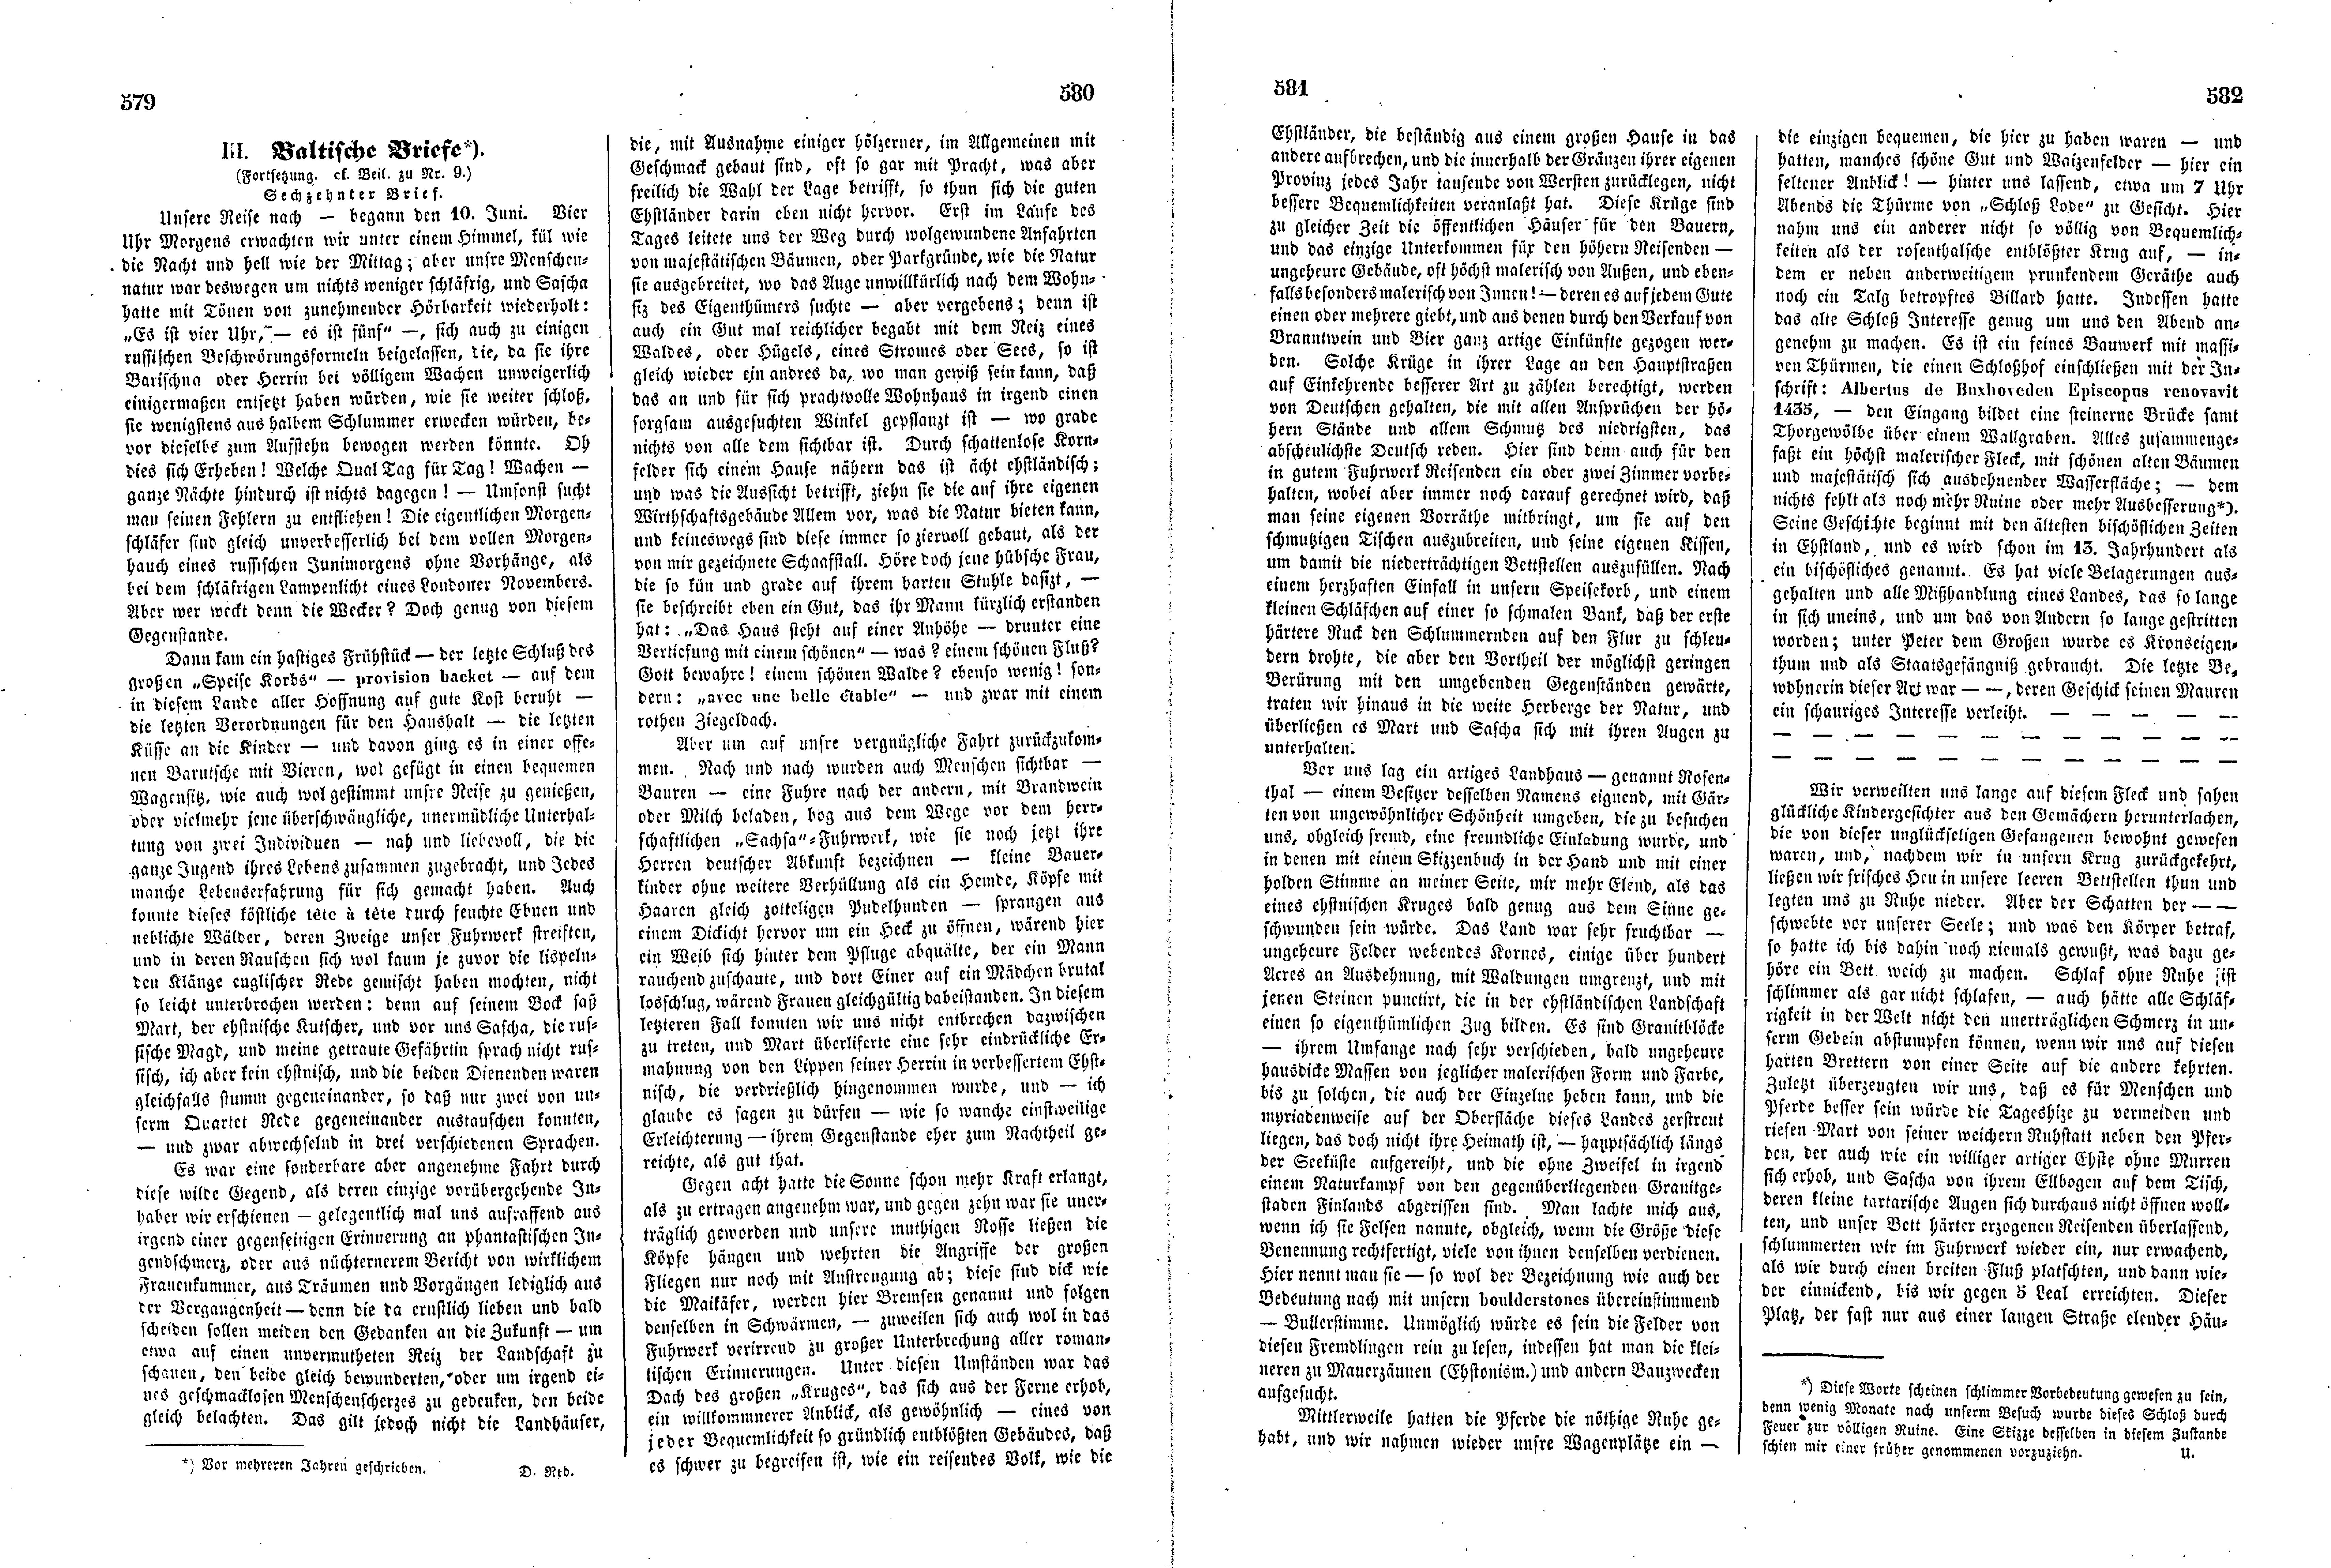 Das Inland [11] (1846) | 150. (579-582) Main body of text